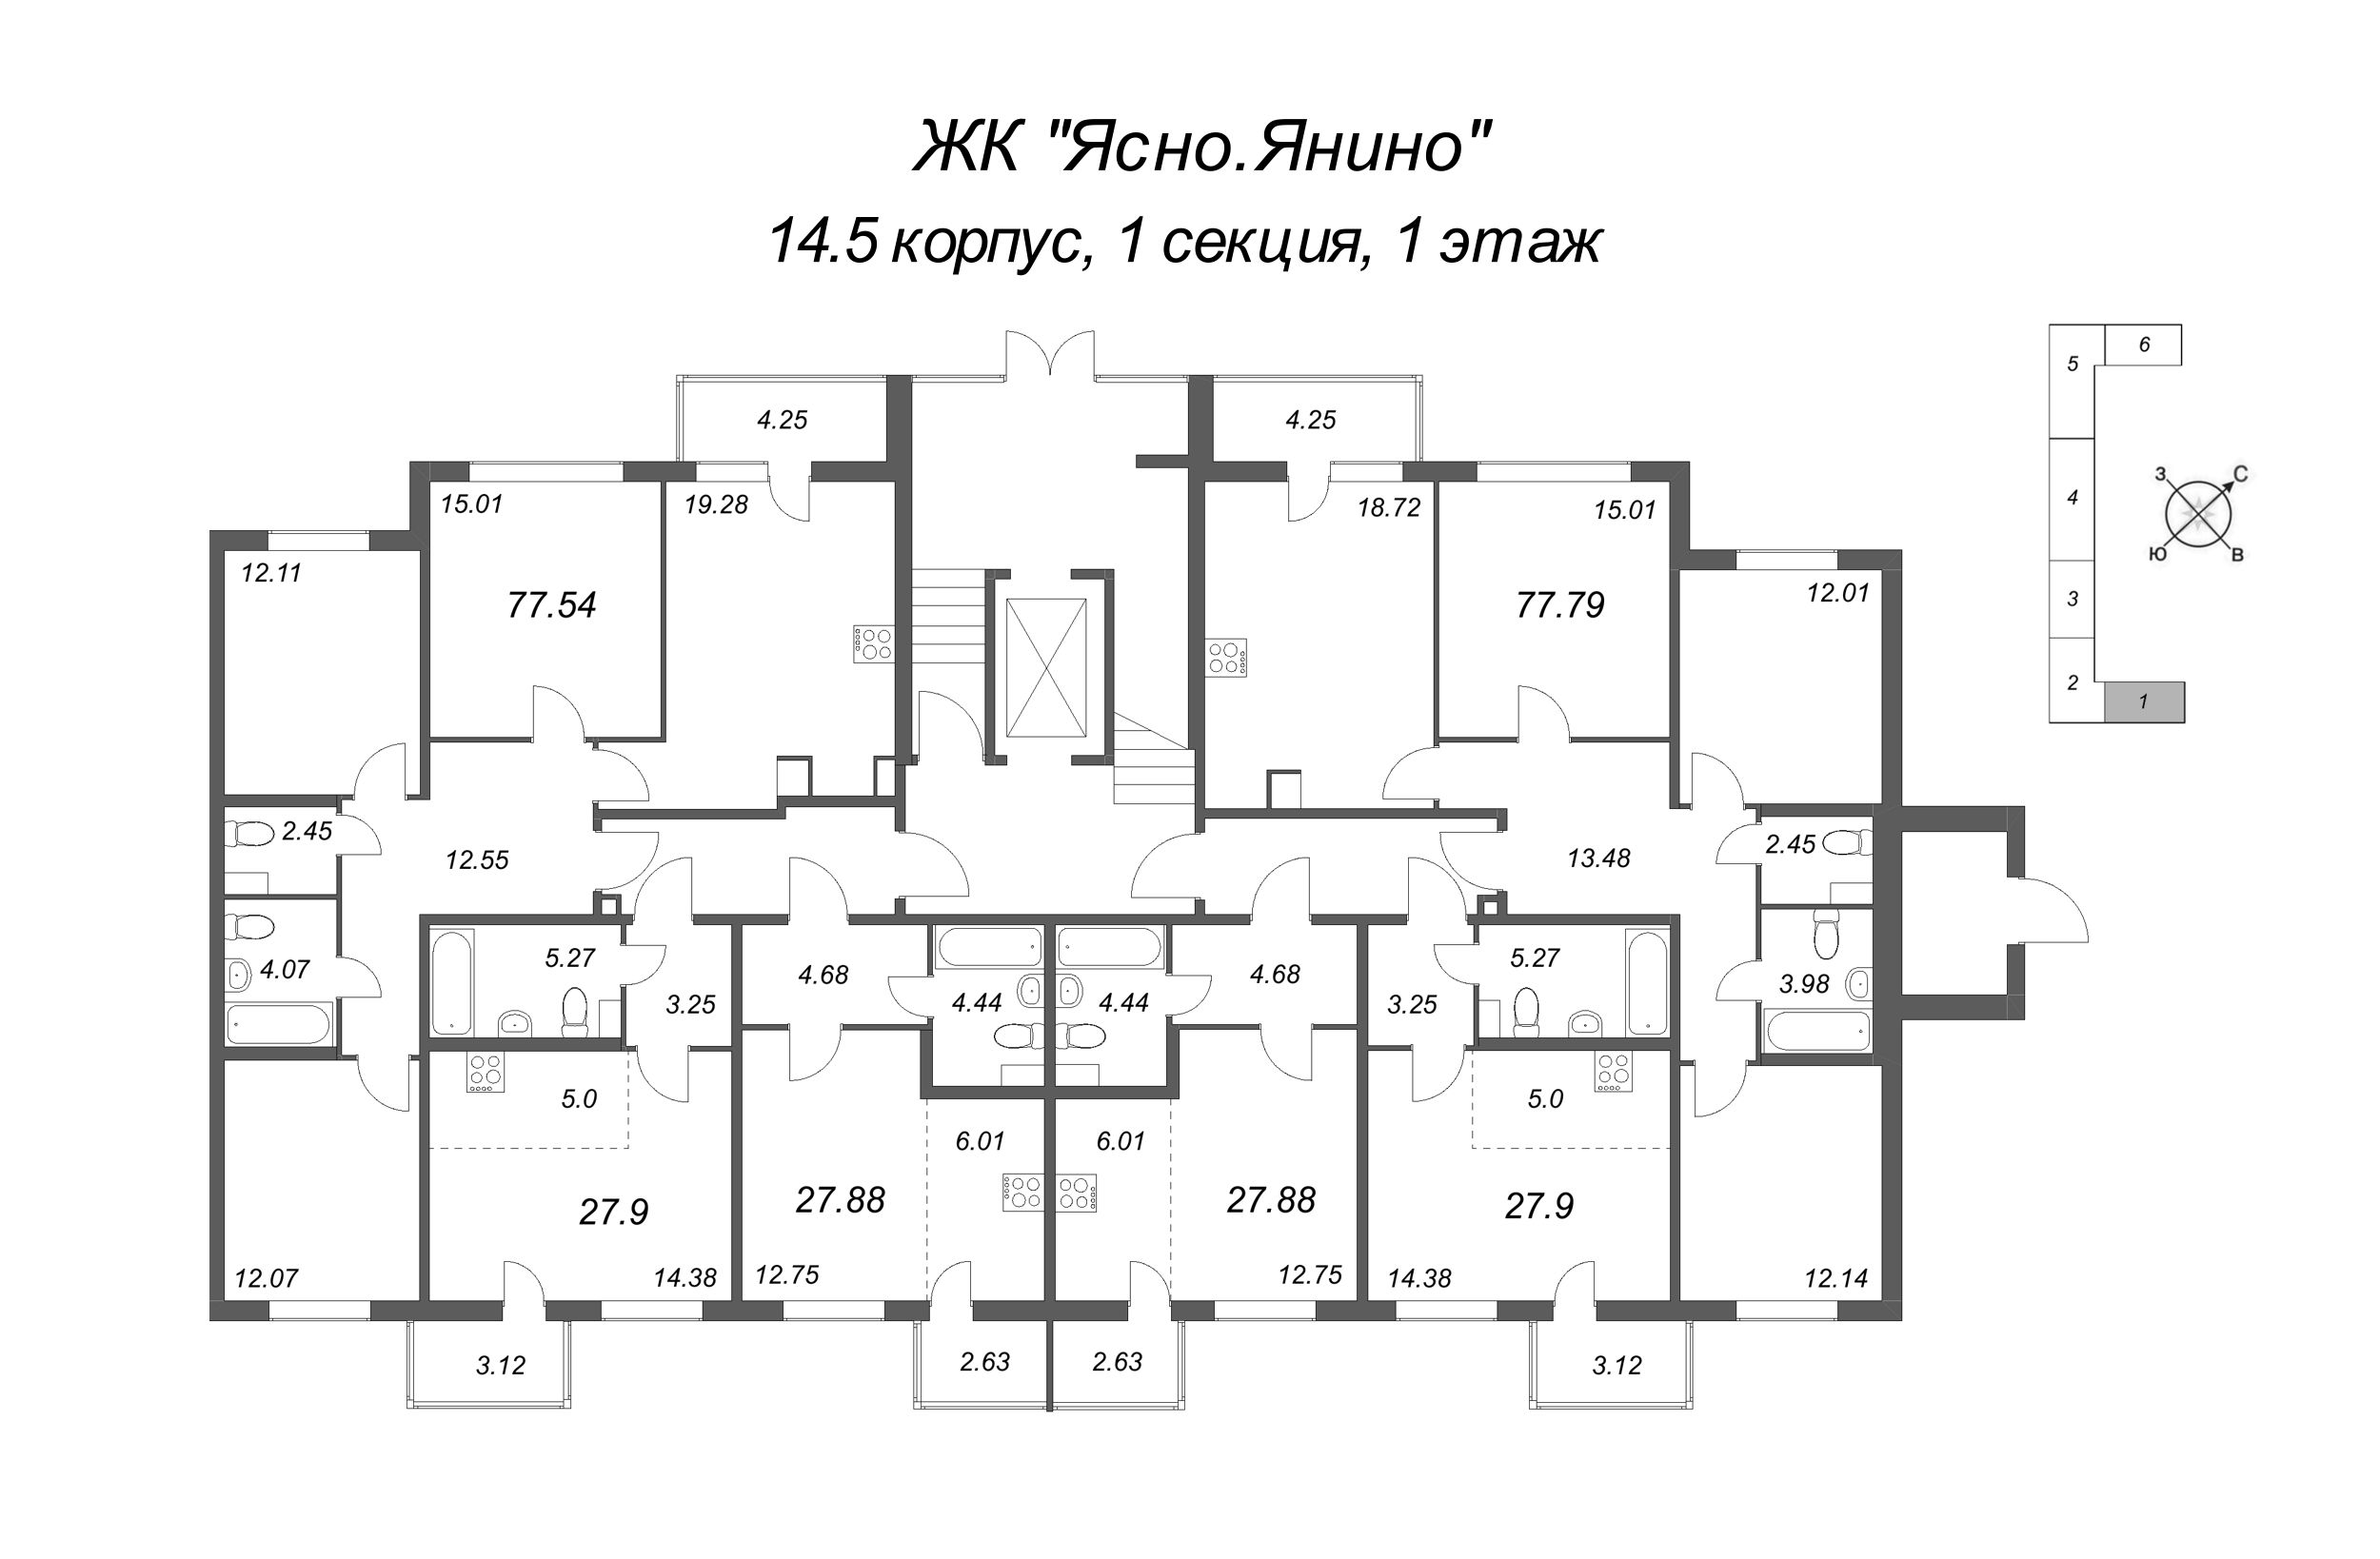 4-комнатная (Евро) квартира, 77.54 м² в ЖК "Ясно.Янино" - планировка этажа